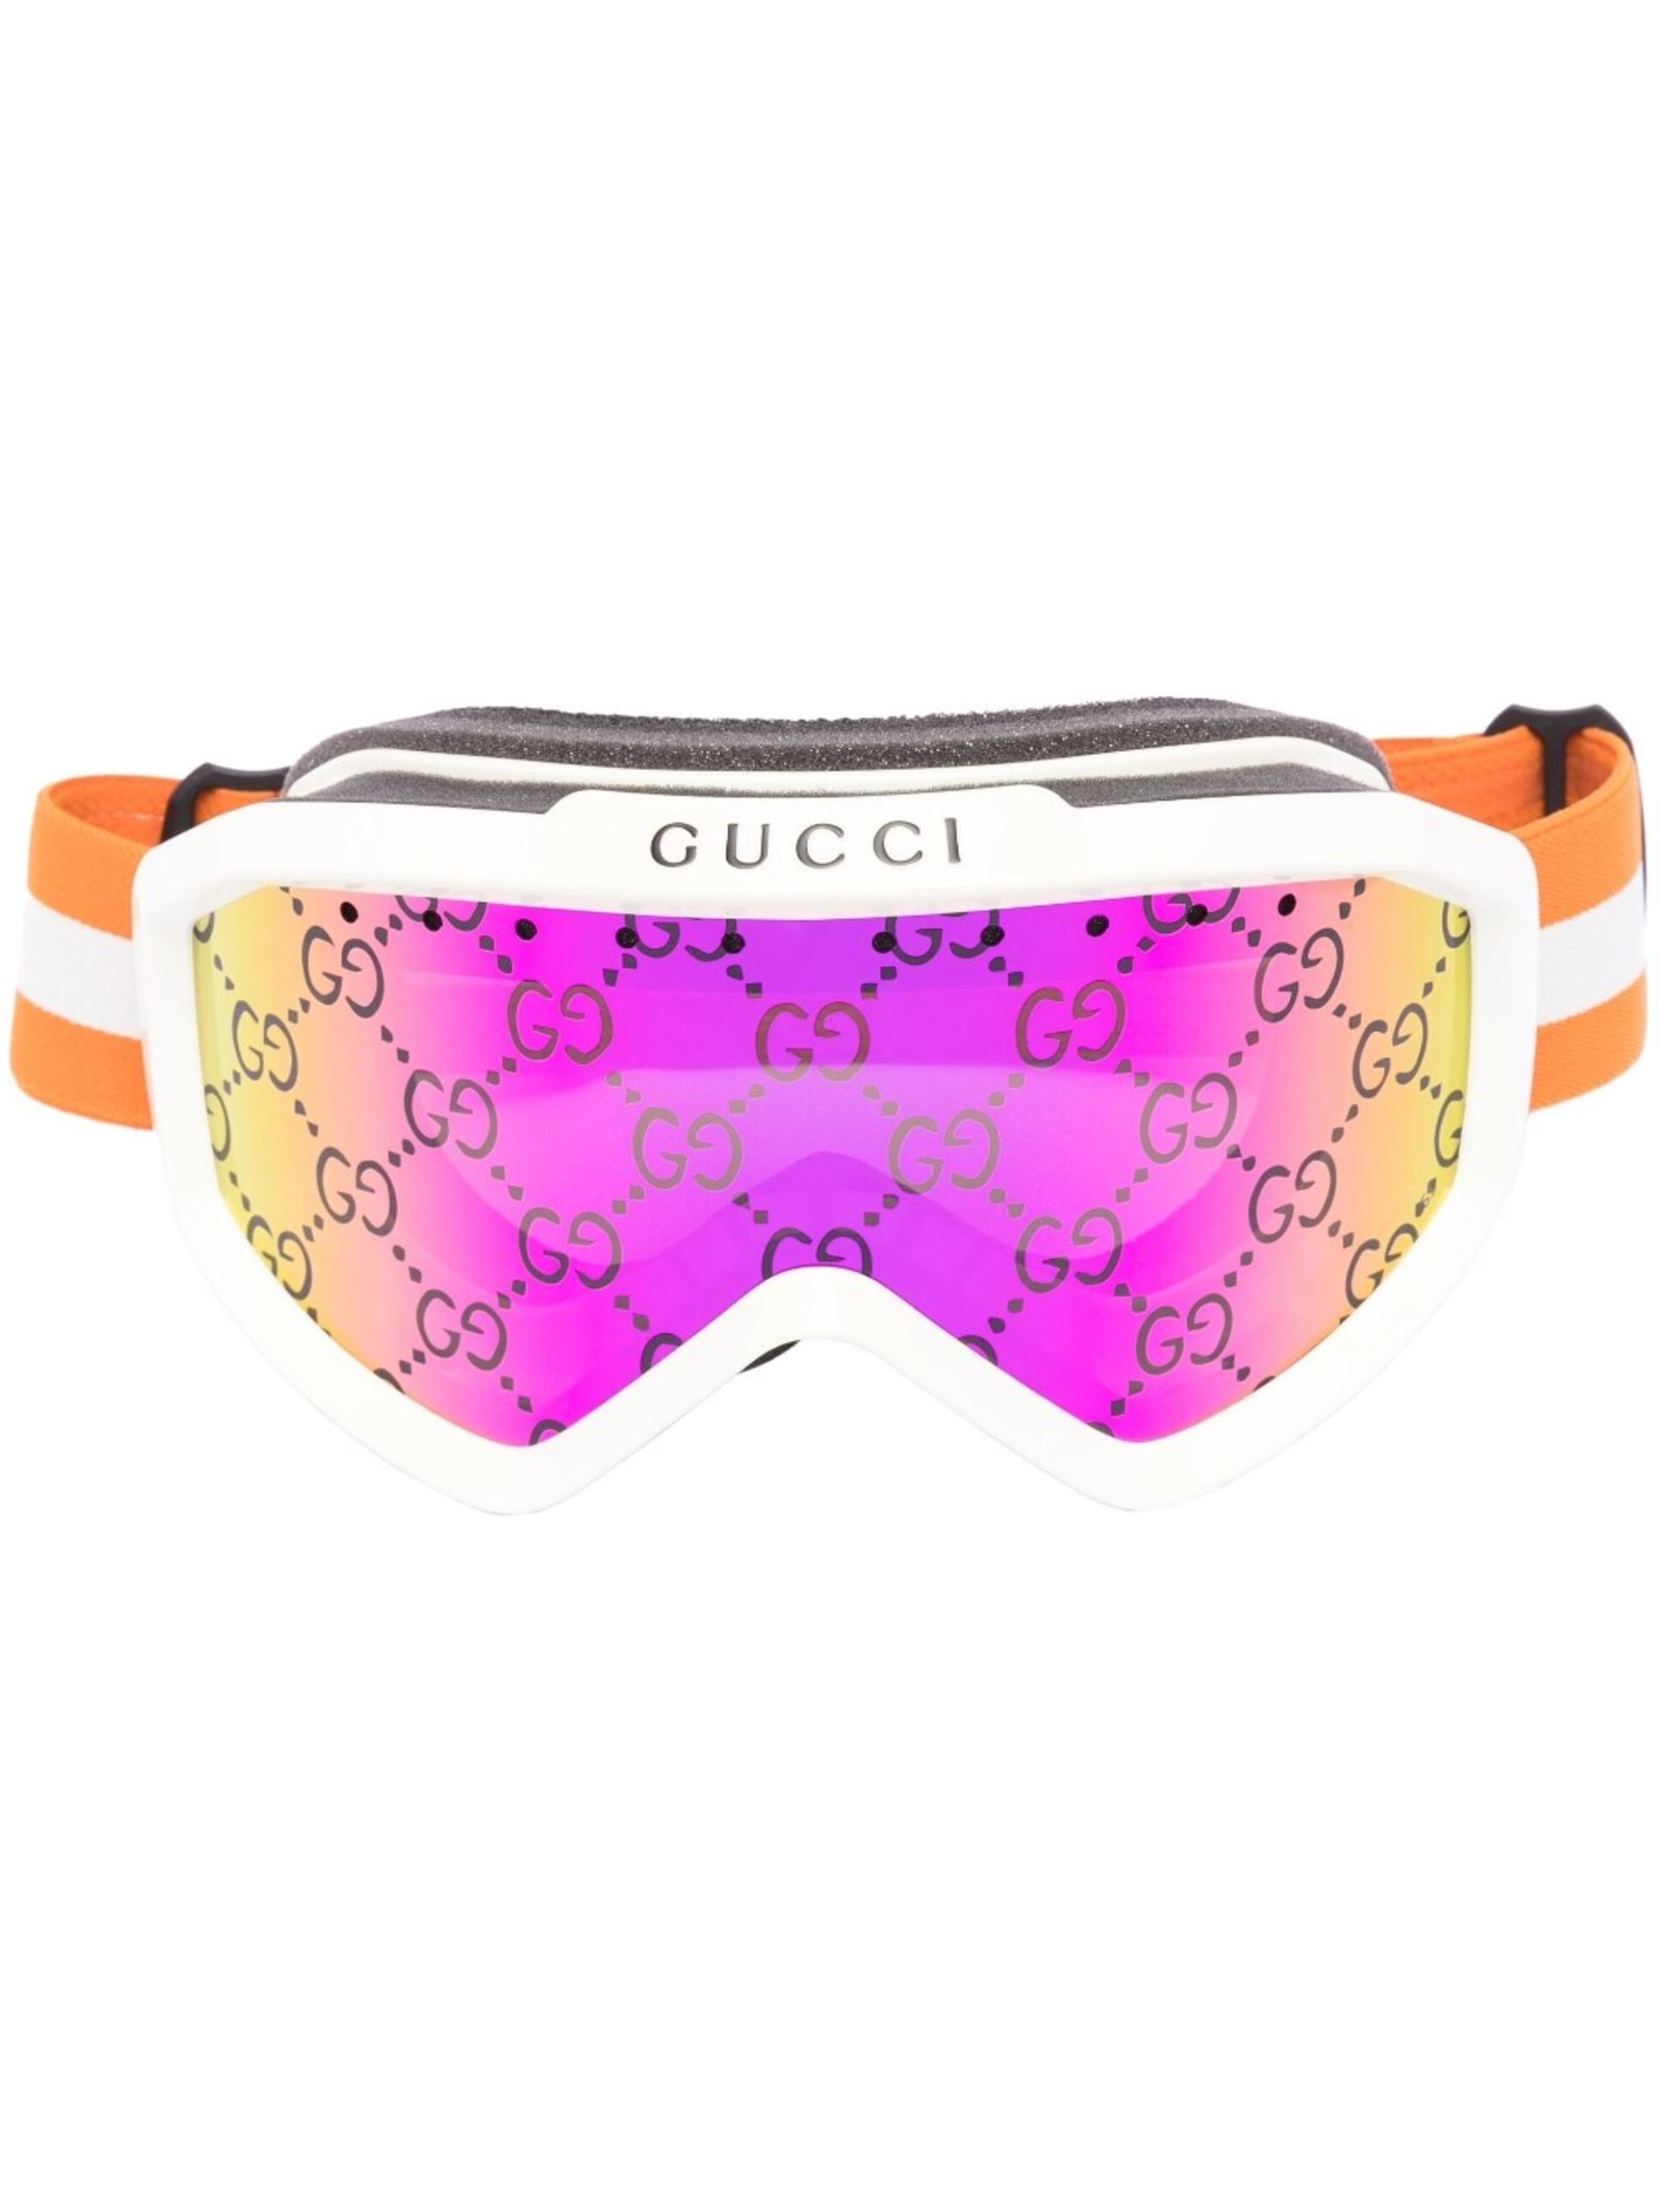 Gucci Monogram Ski Mask - Unisex - Acetate in Pink | Lyst